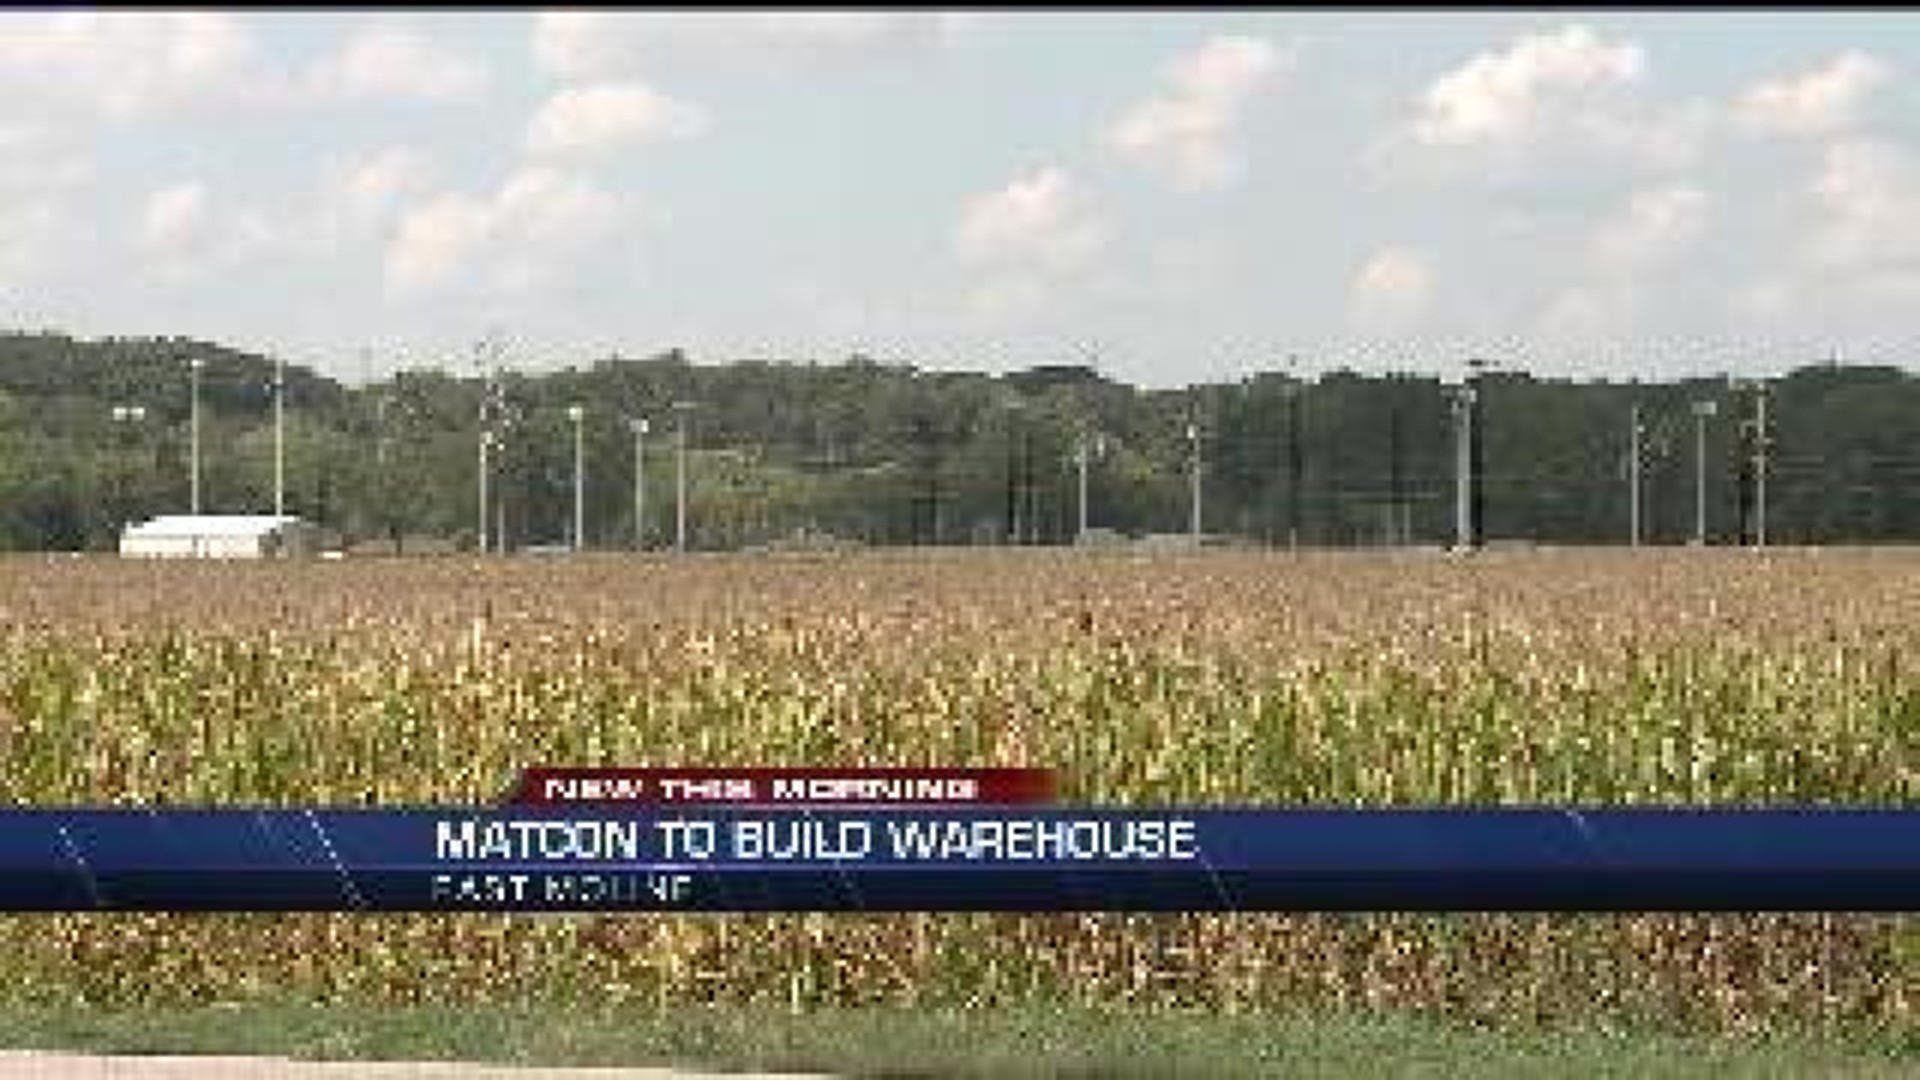 New MATCON Warehouse